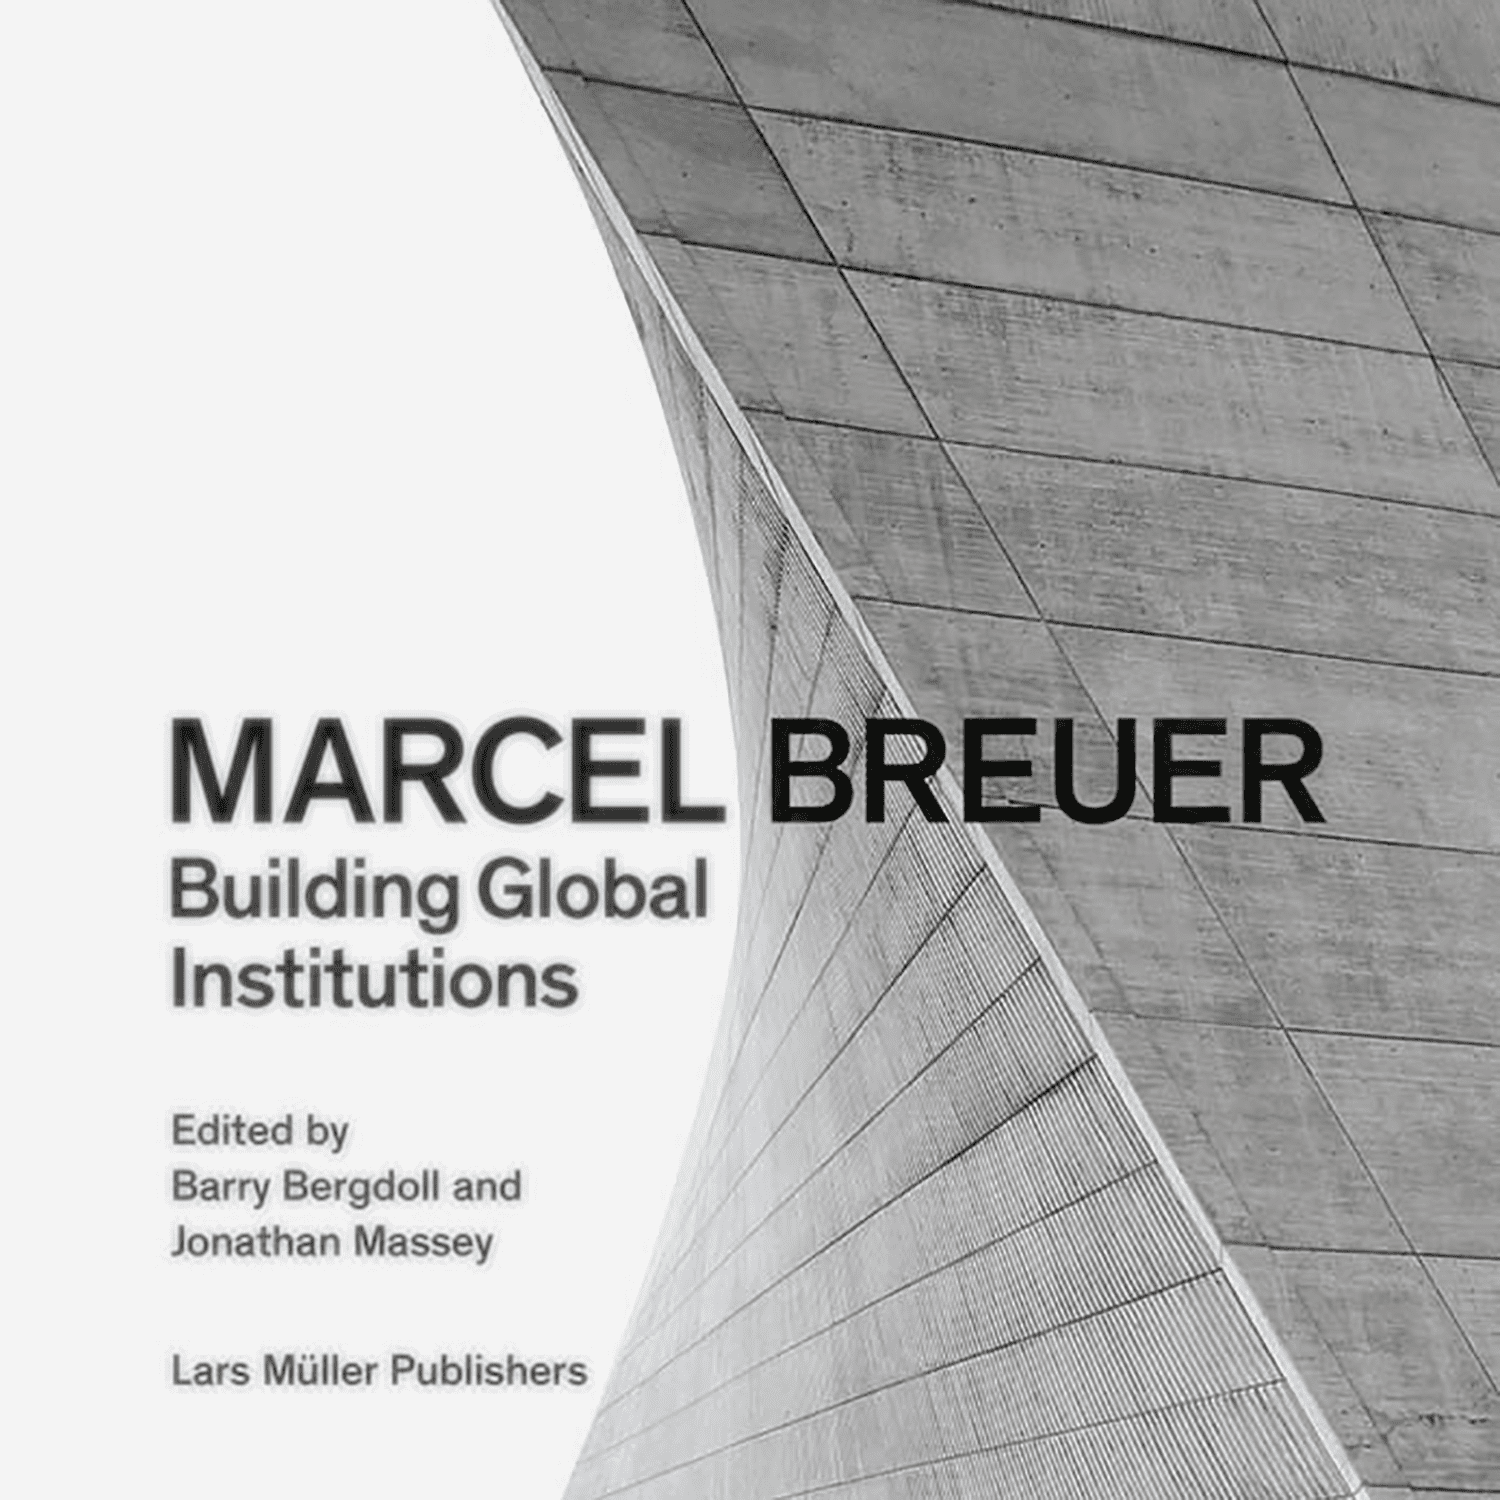 Image de Marcel Breuer - Bâtir des institutions mondiales